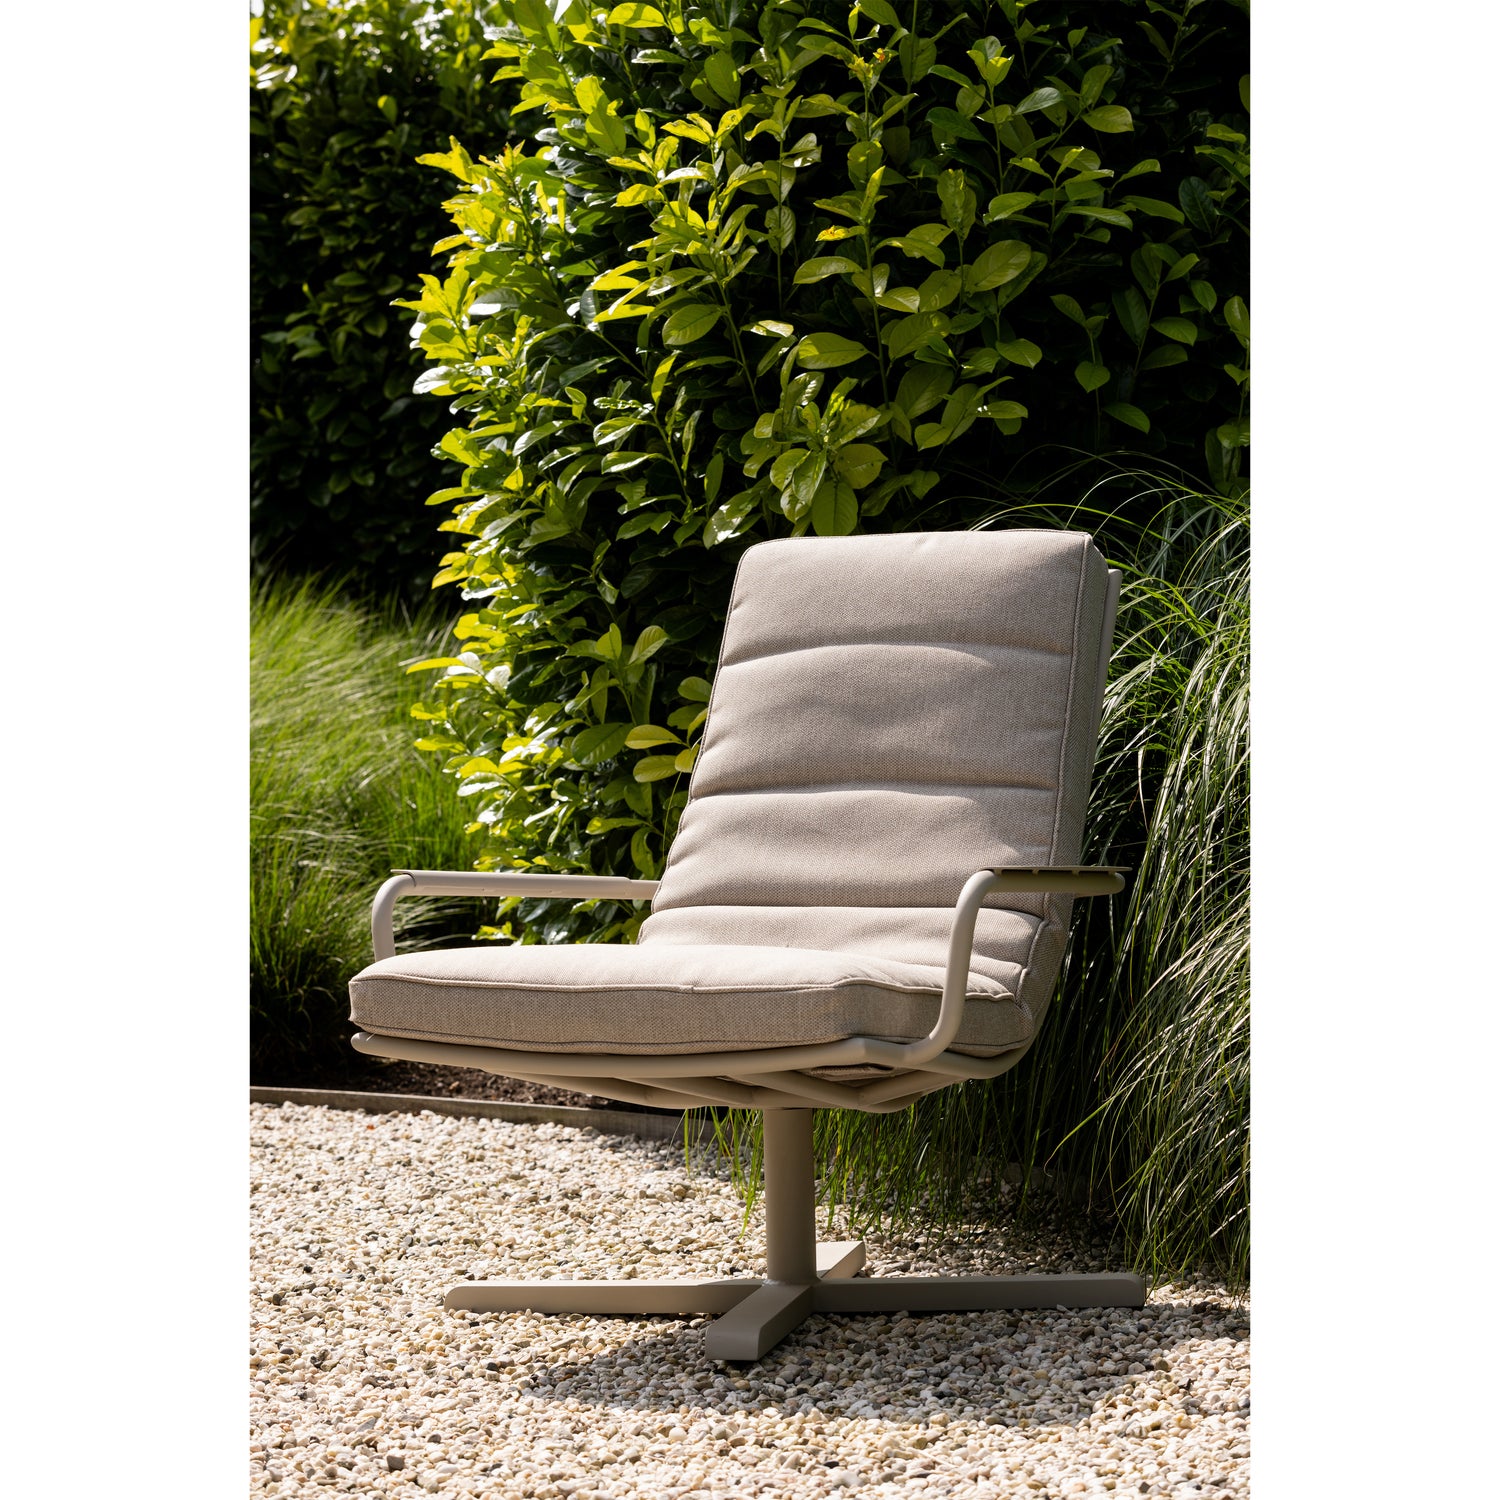 500009-Z-01_SF_EXT_Coosa_fauteuil_aluminium_zand.jpg?auto=webp&format=png&width=1500&height=1500